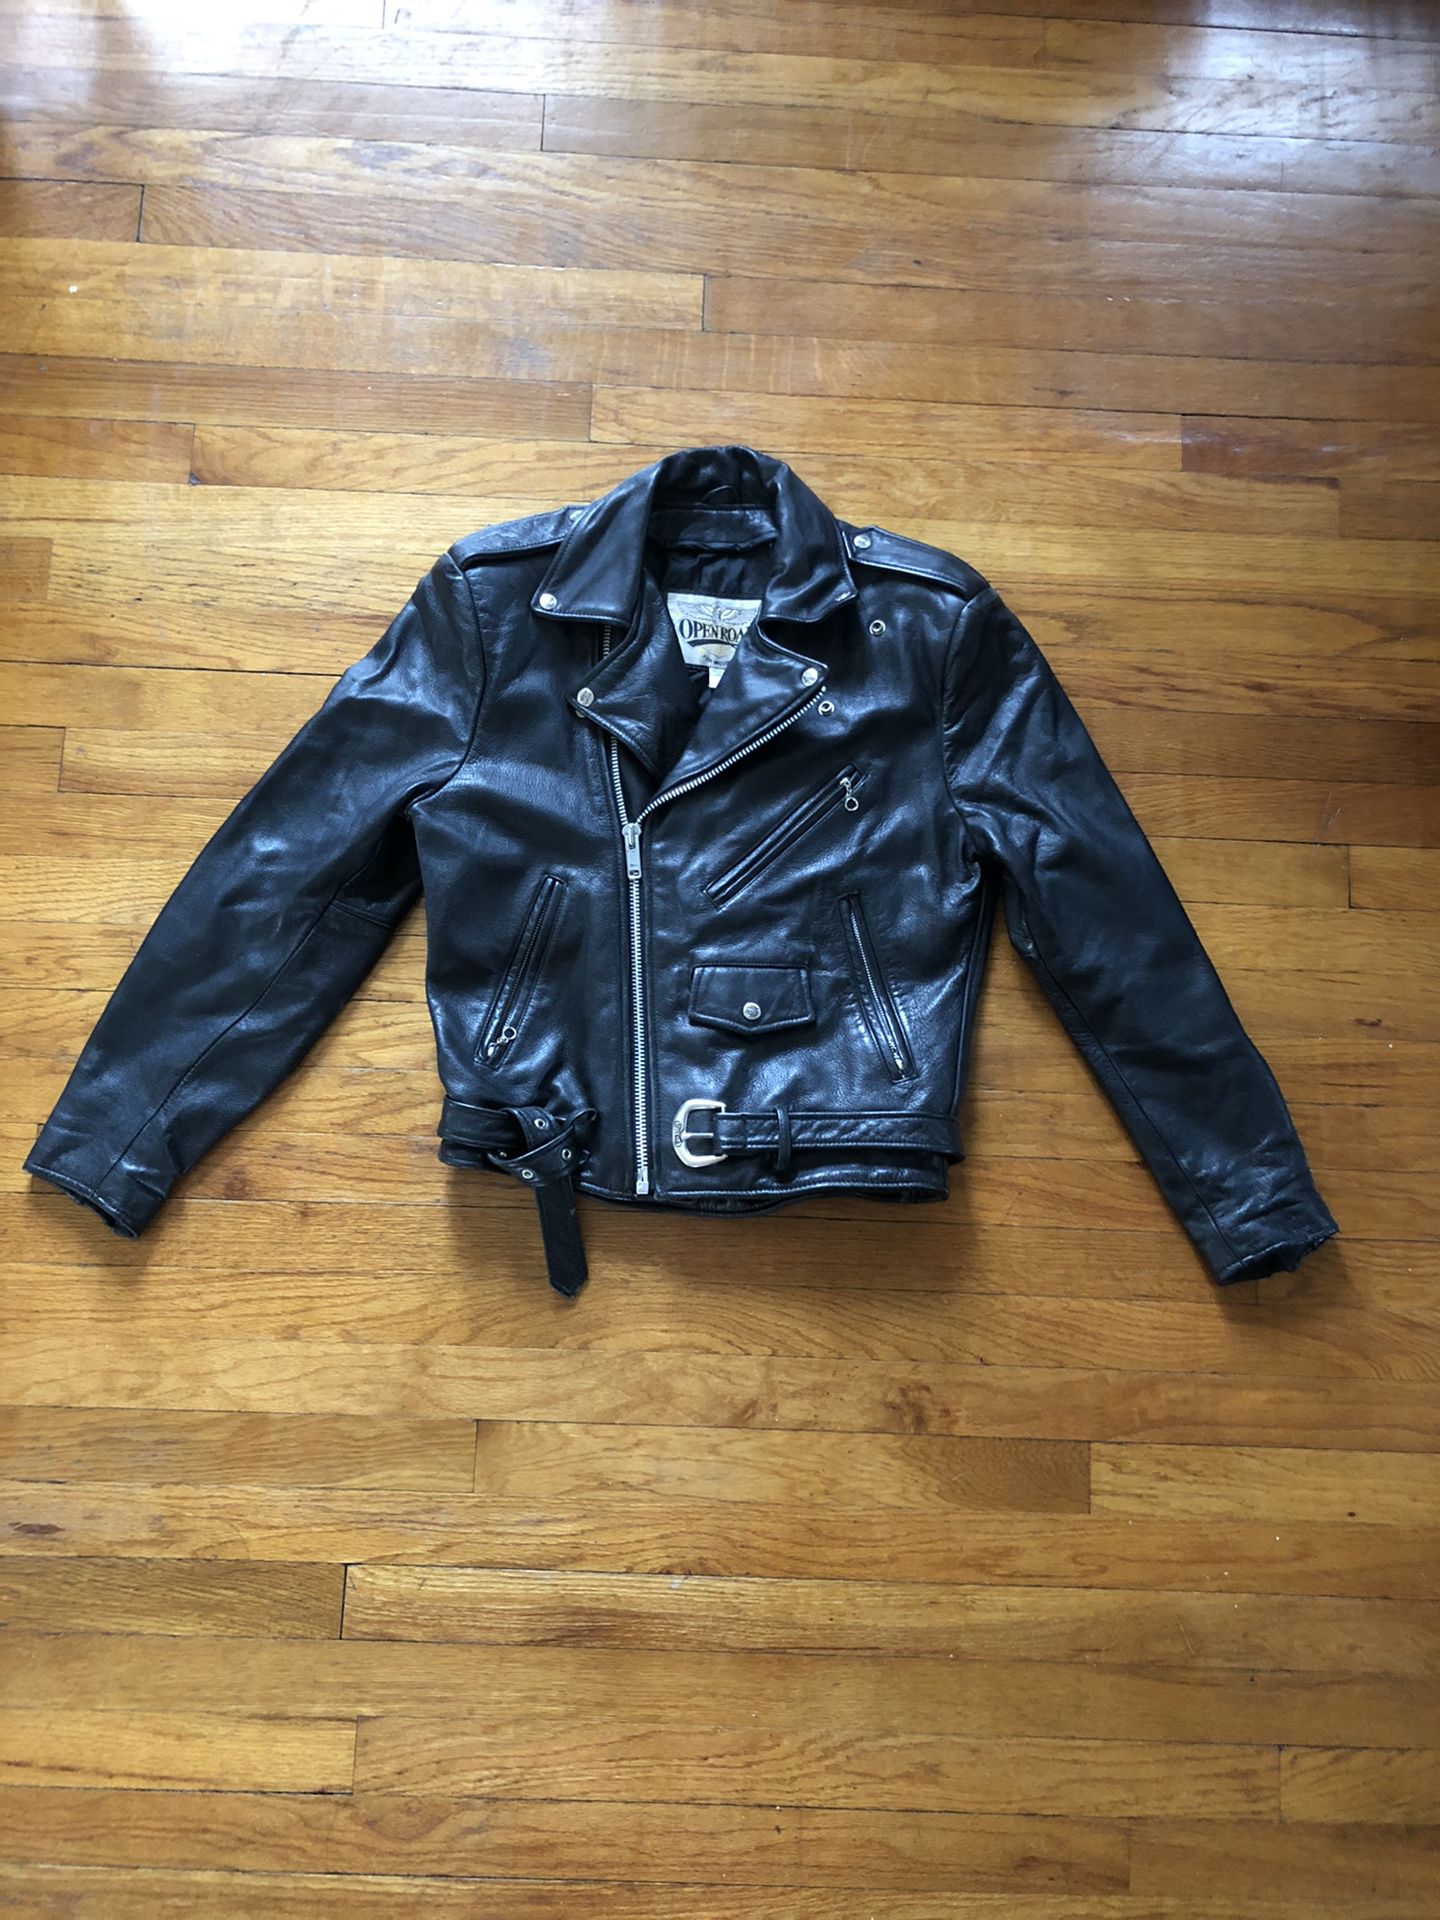 Wilson’s Black Leather Motorcycle Jacket